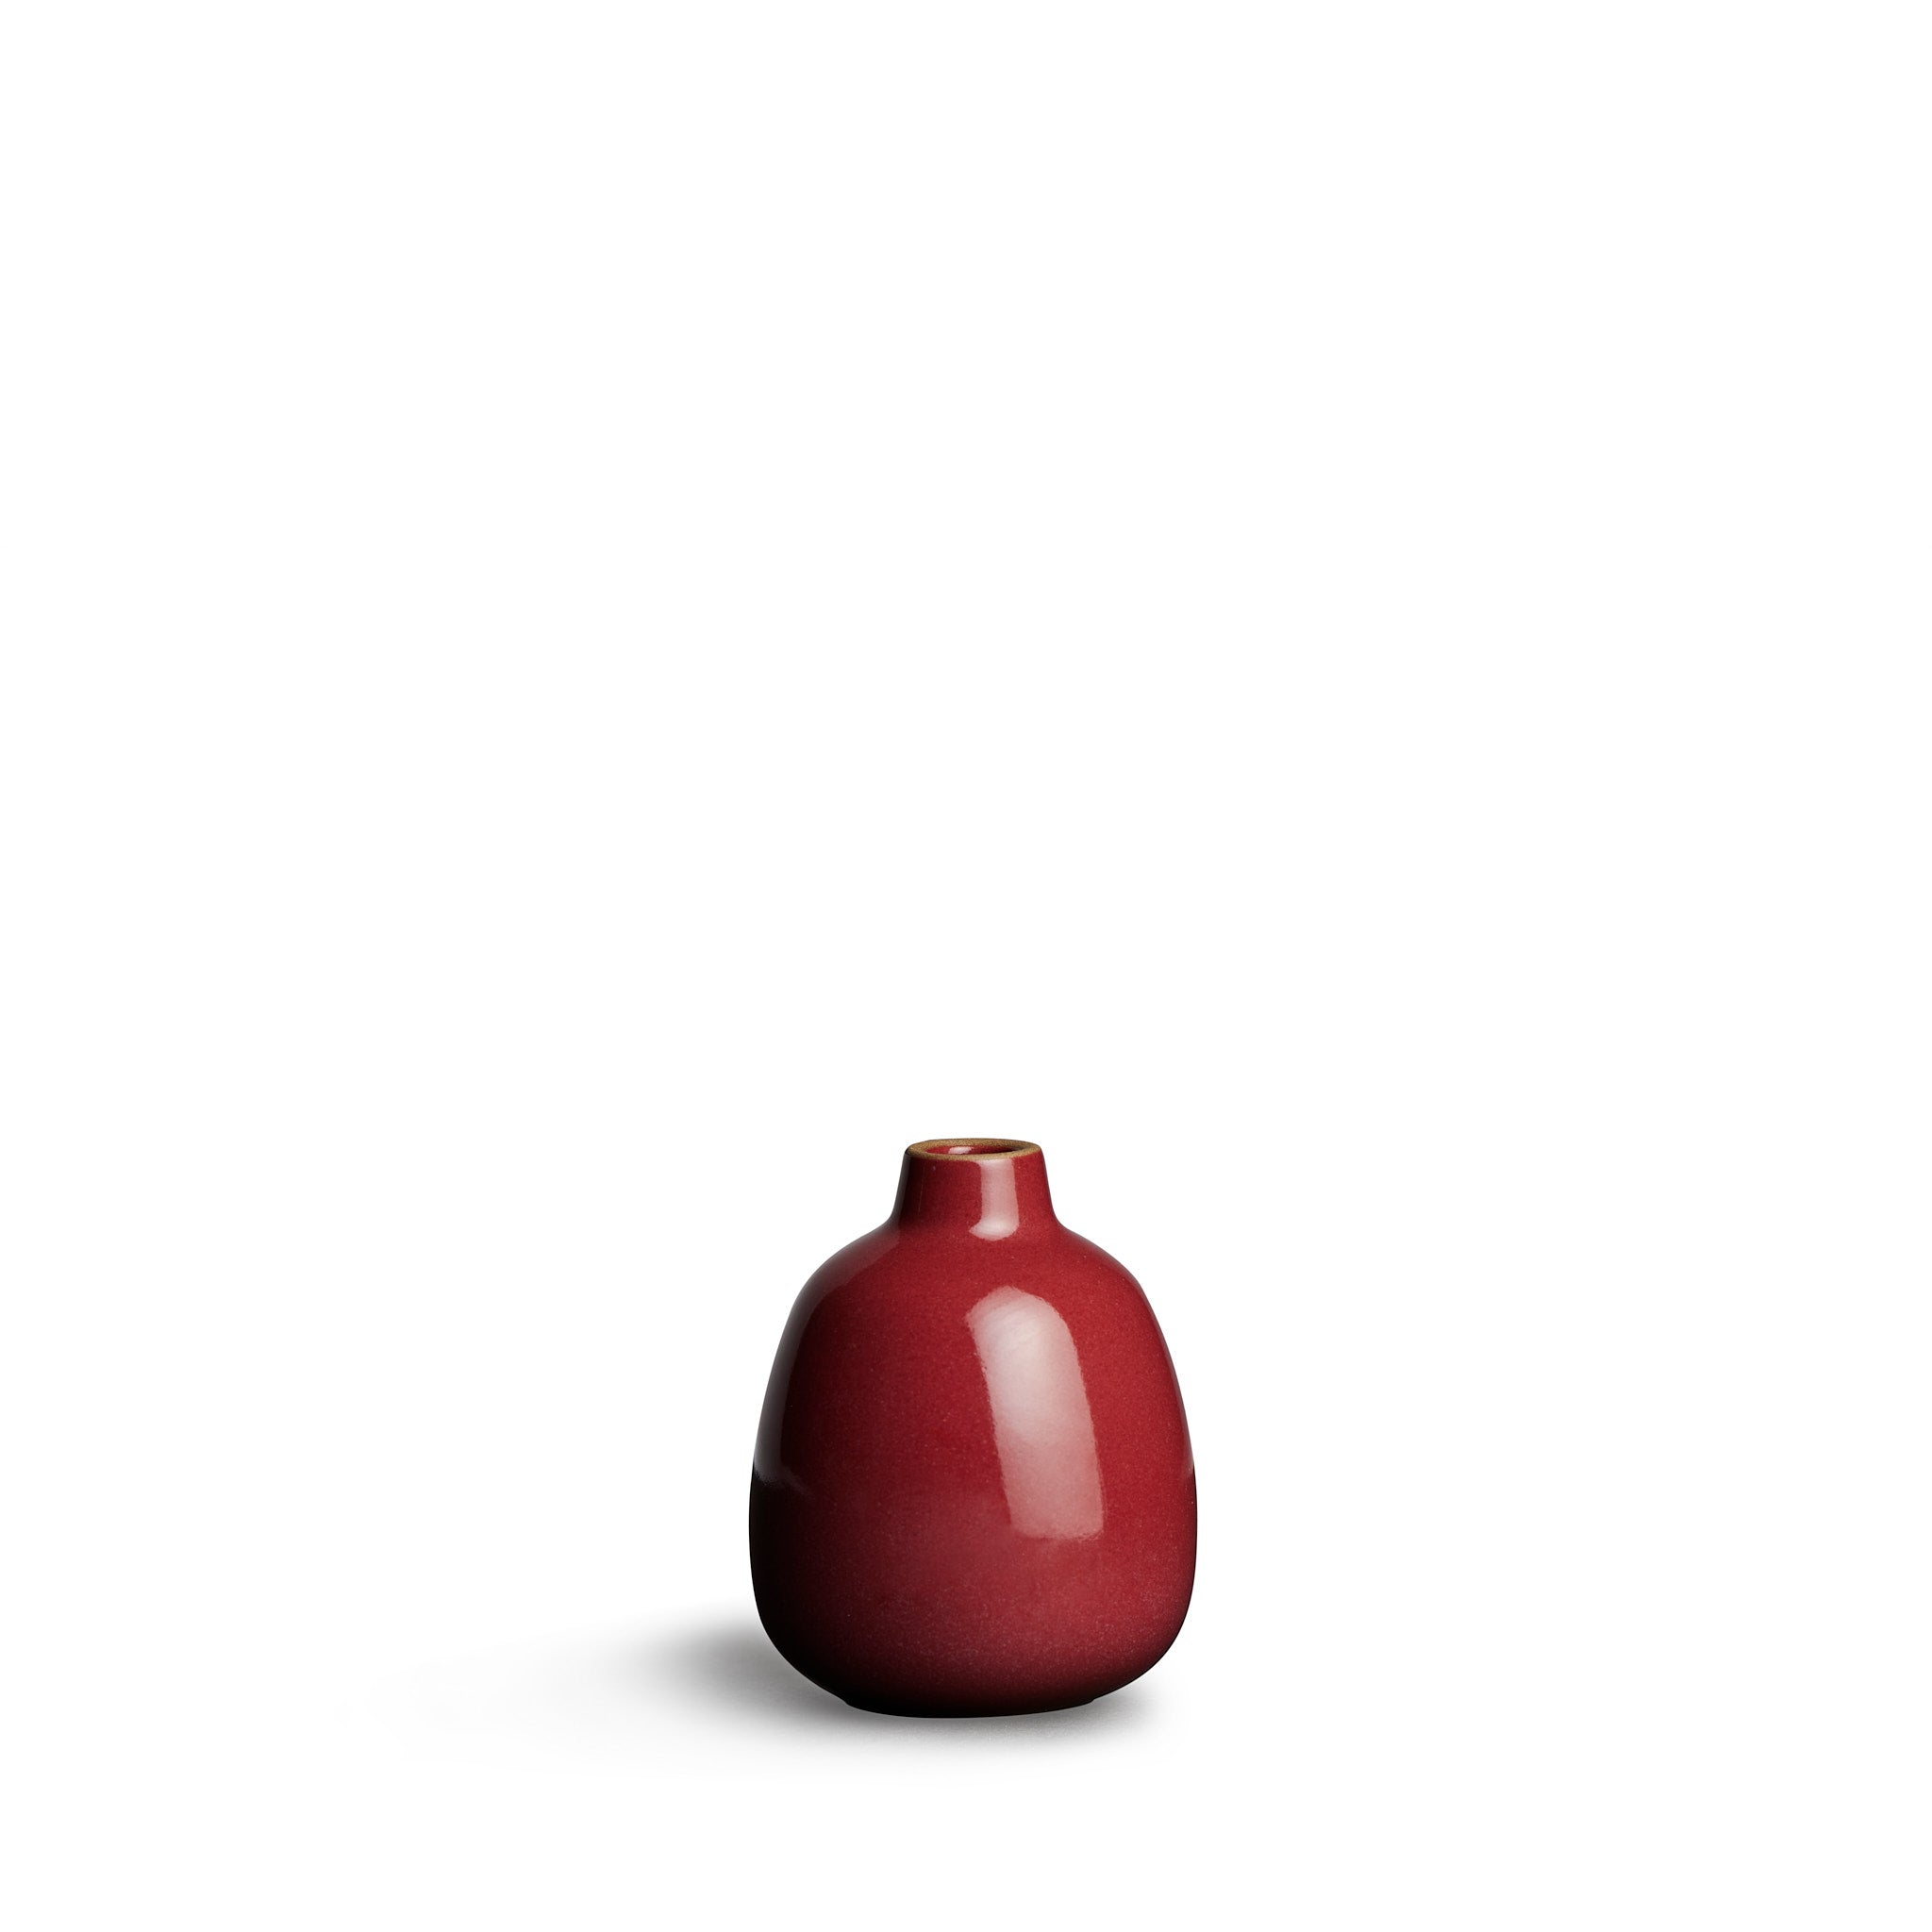 Bud Vase in Red Plum Zoom Image 1